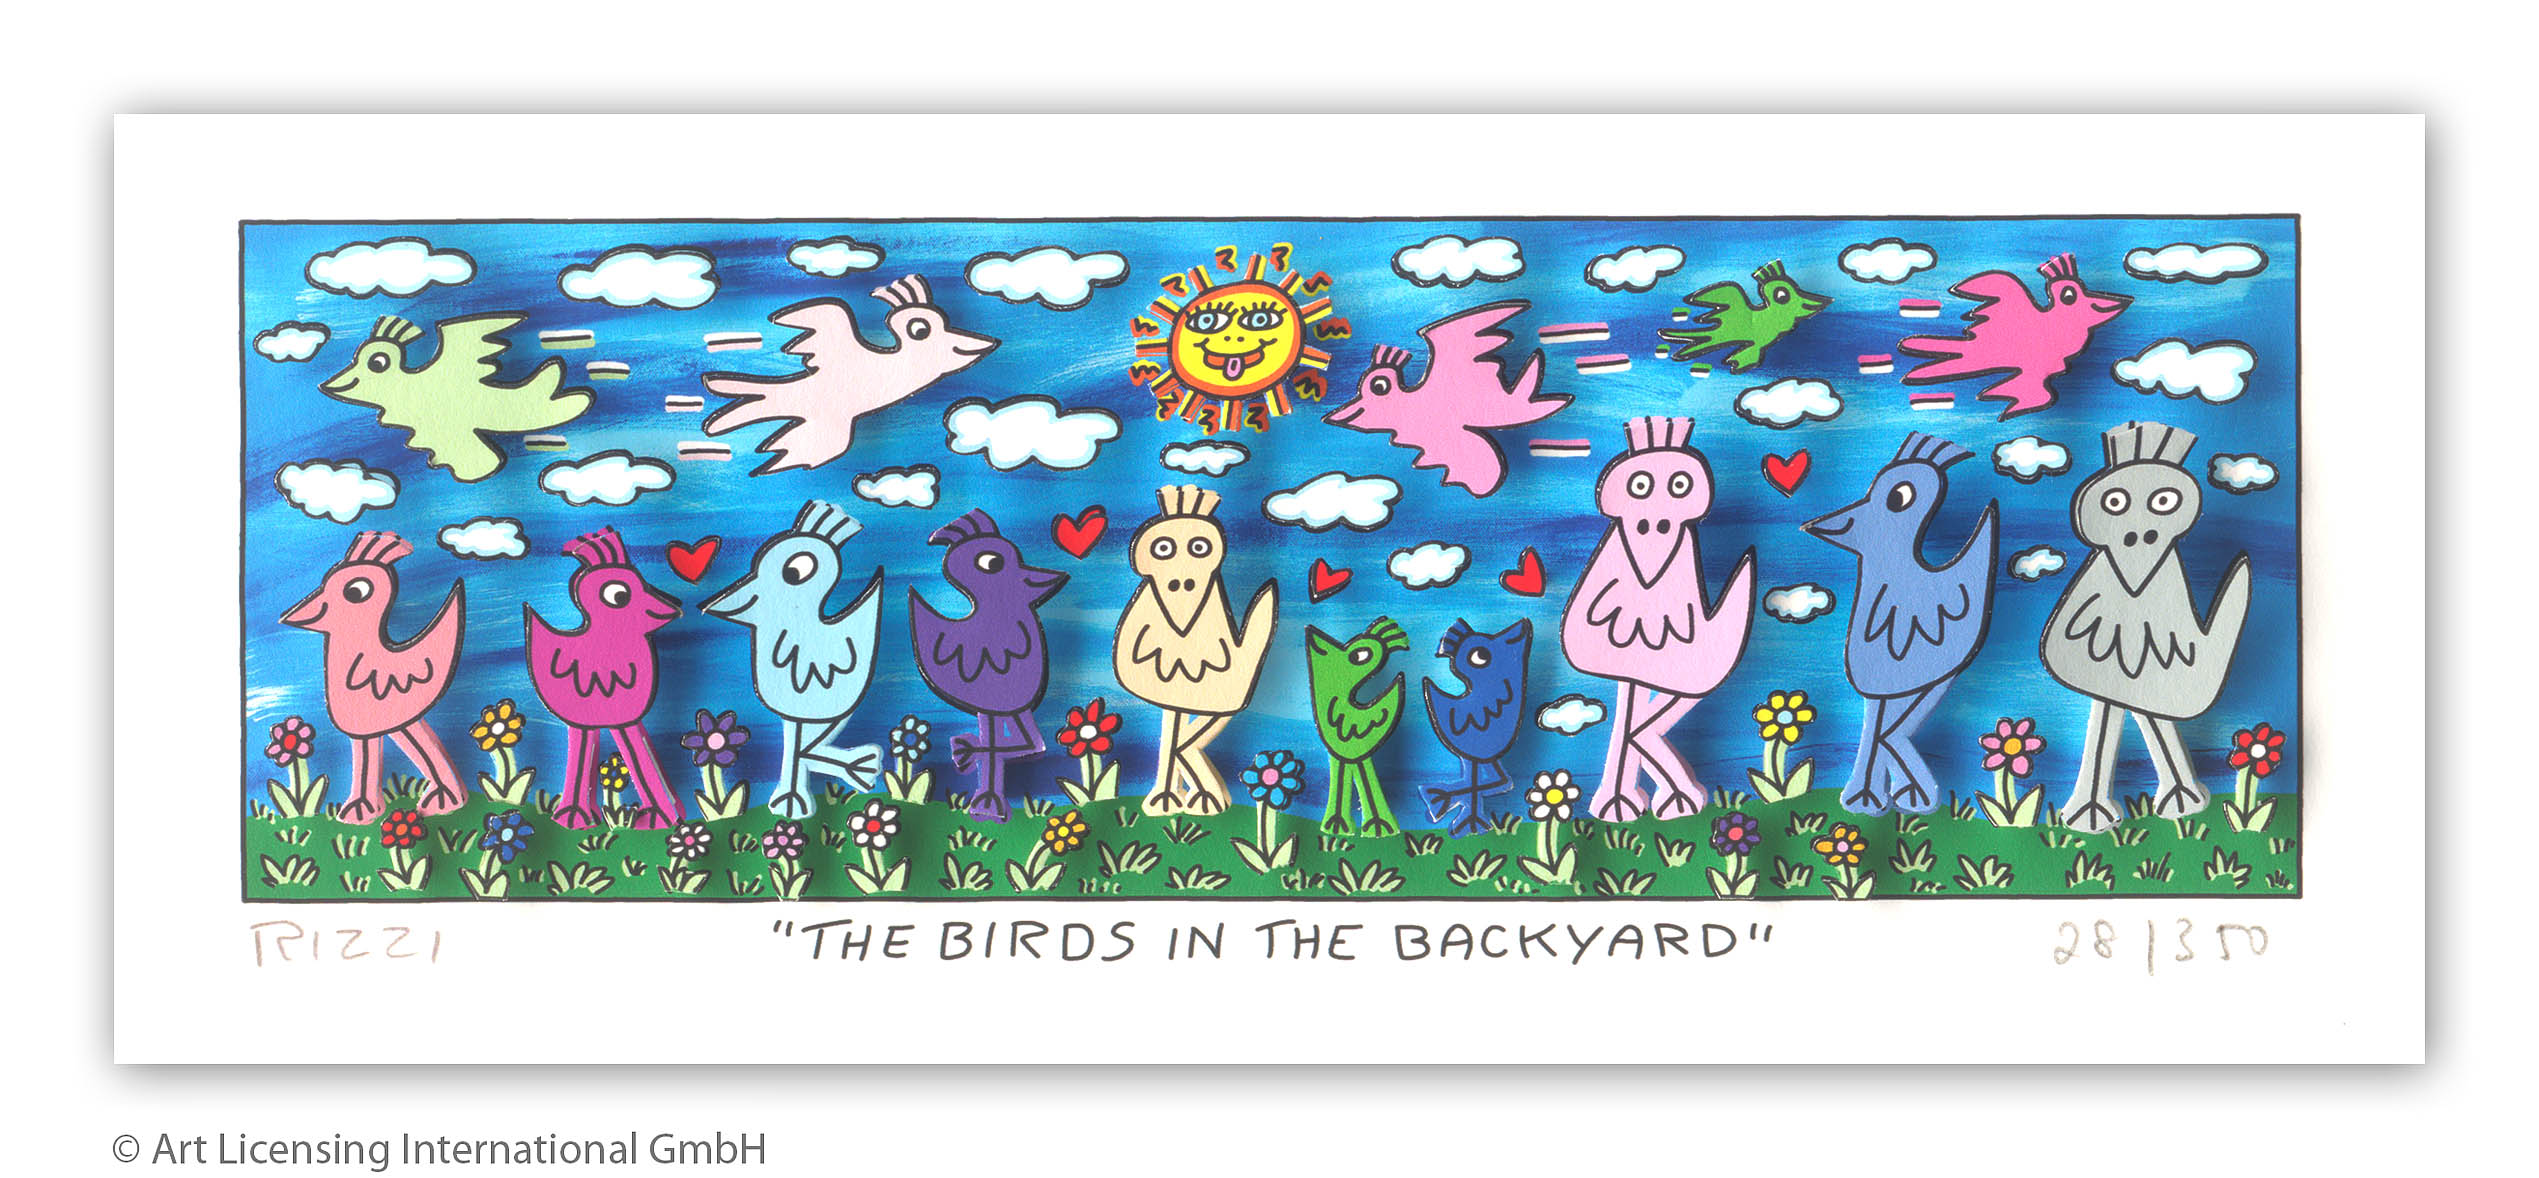 The Birds in the Backyard